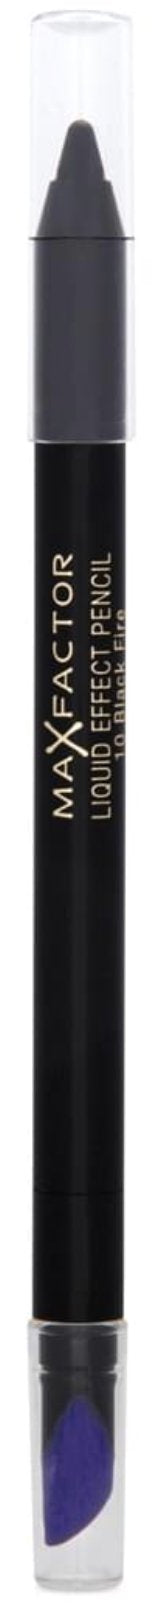 Max Factor Liquid Effect Eyeliner 10 Black Fire